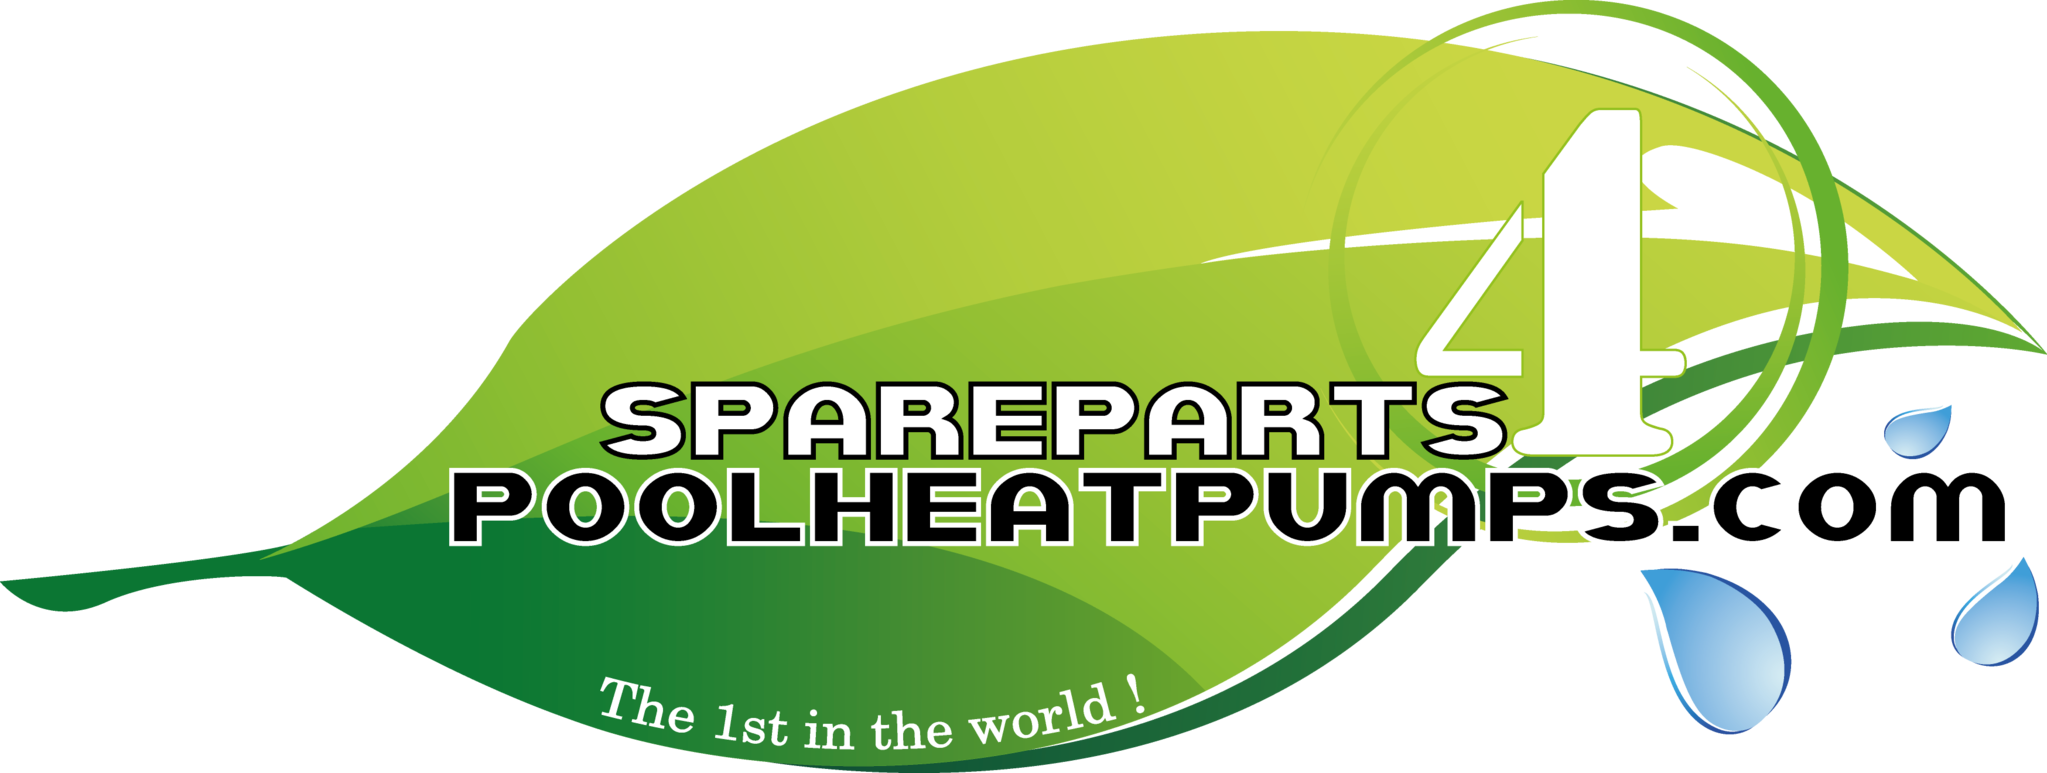 Spareparts4poolheatpumps